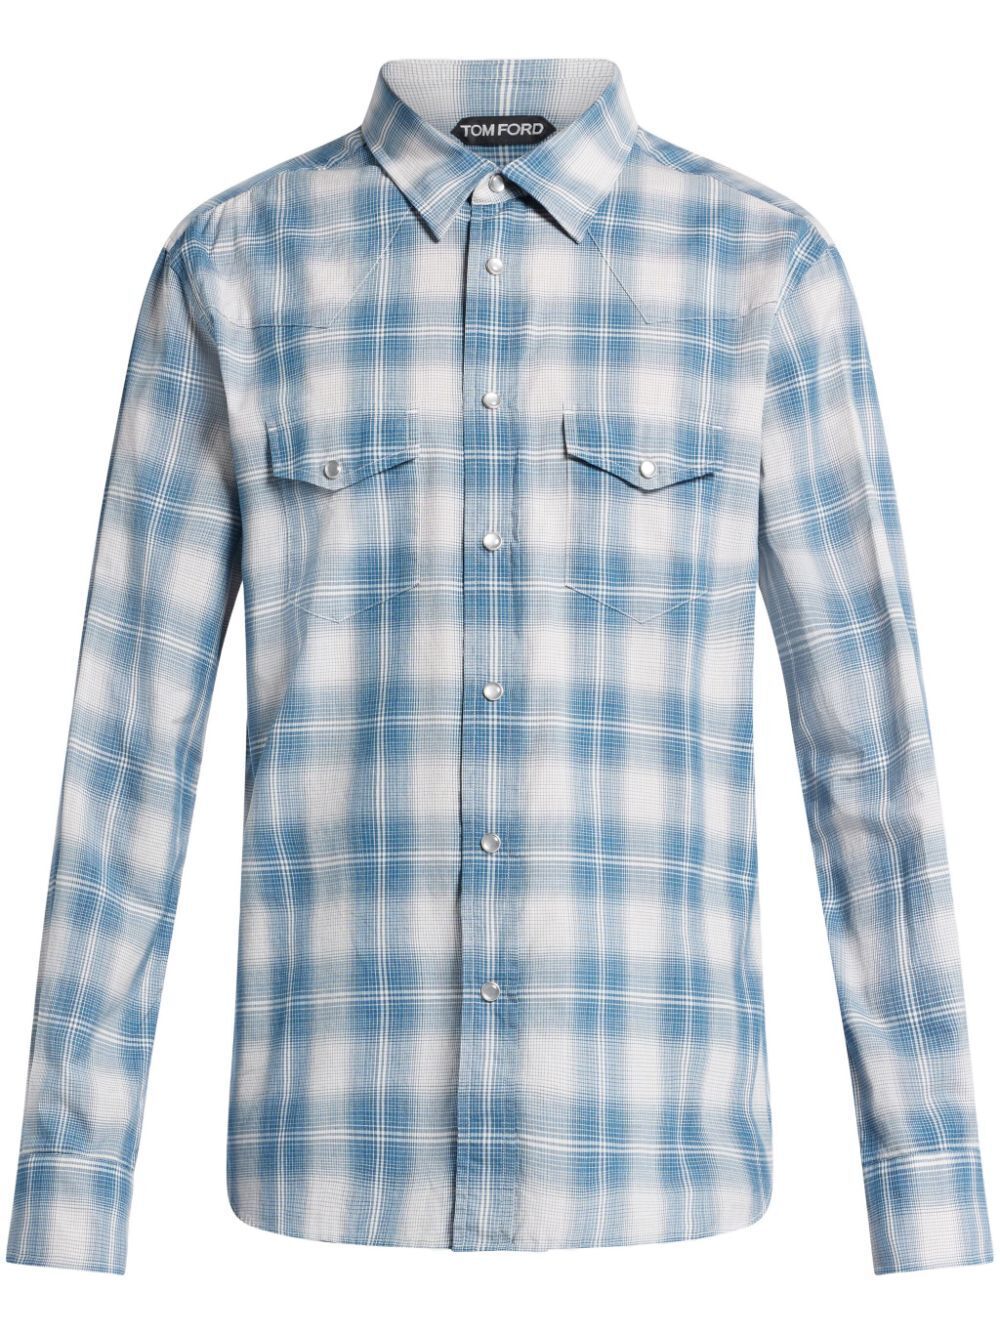 TOM FORD Checkered Design Cotton Shirt for Men - SS24 Navy